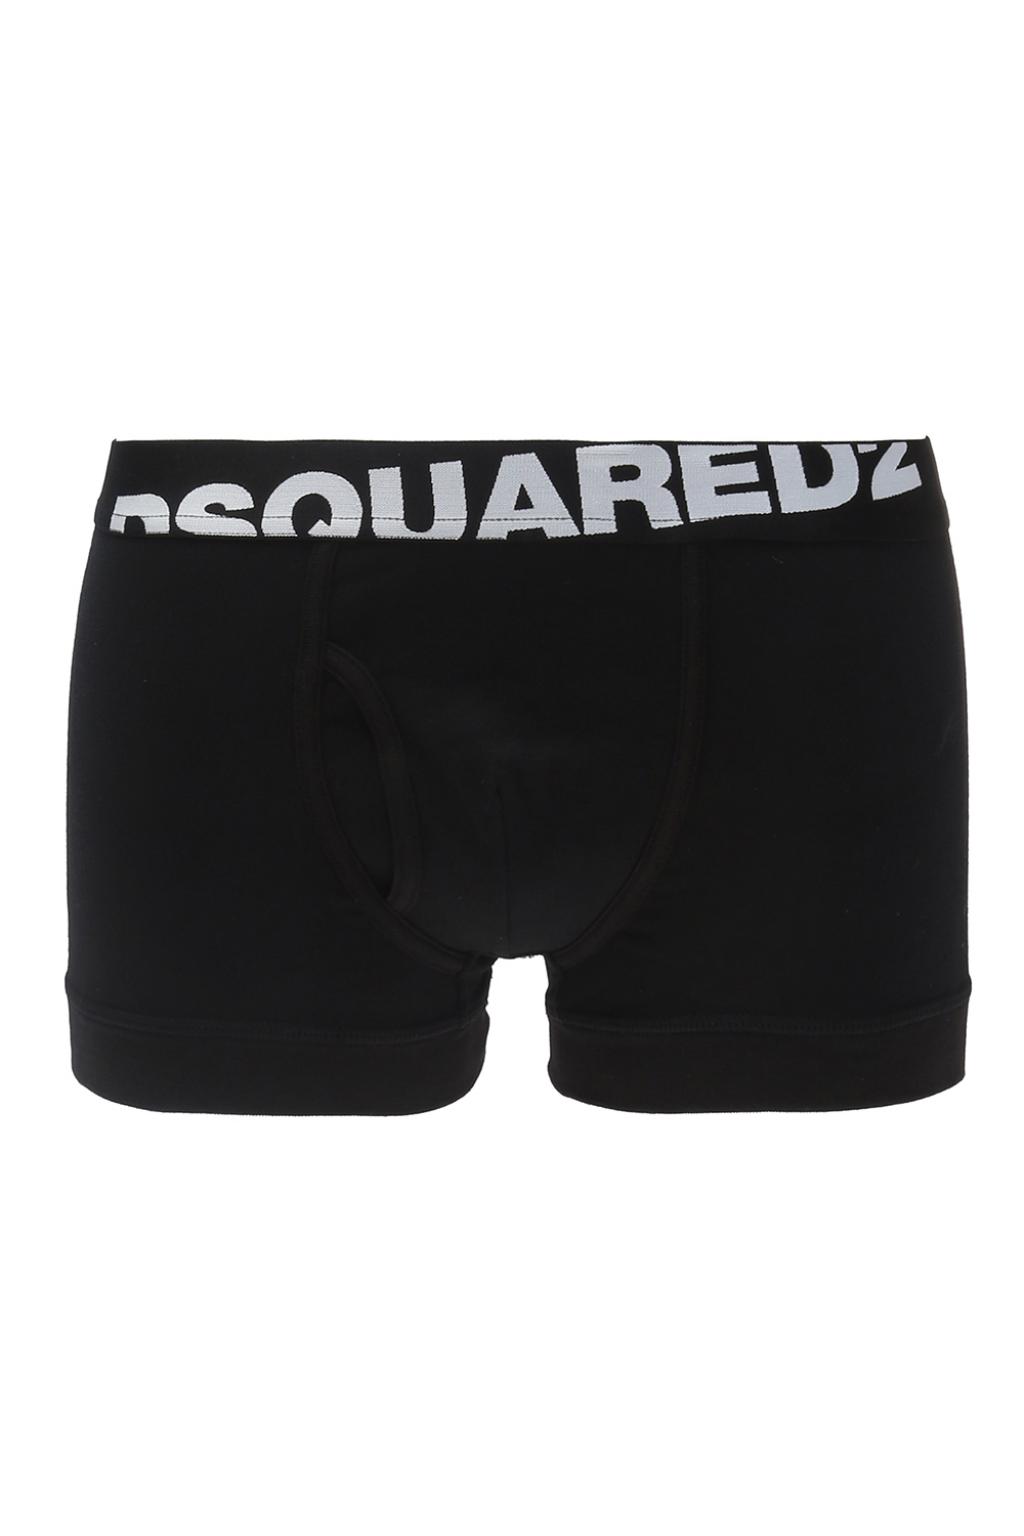 dsquared2 boxer shorts